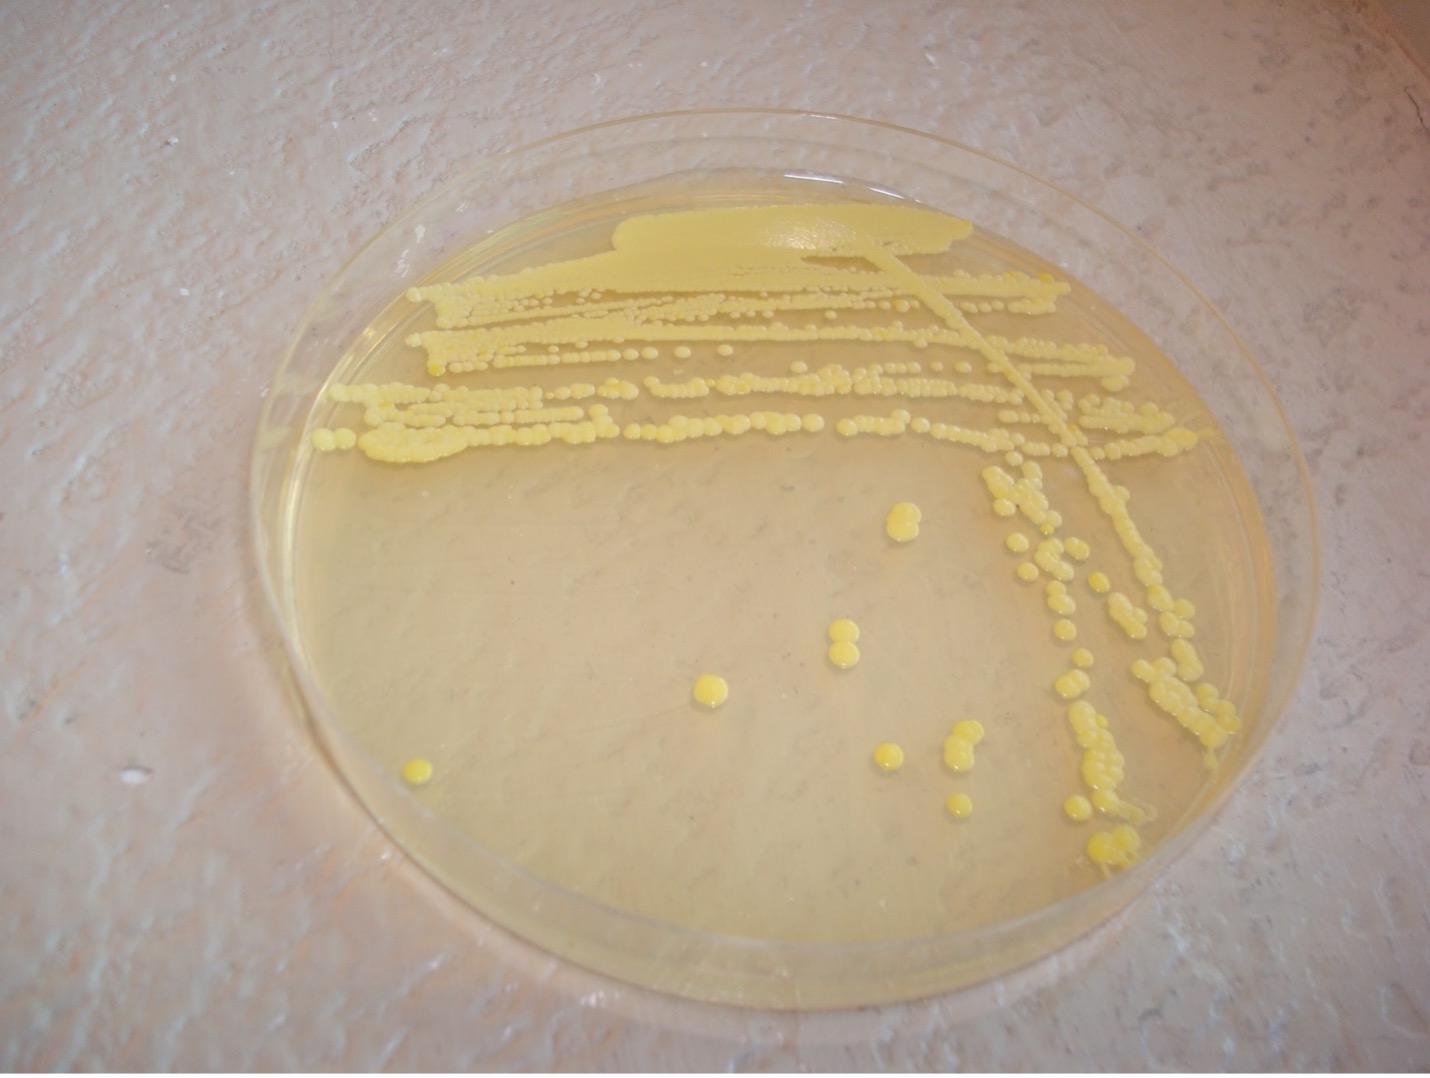 Micrococcus luteus pigment